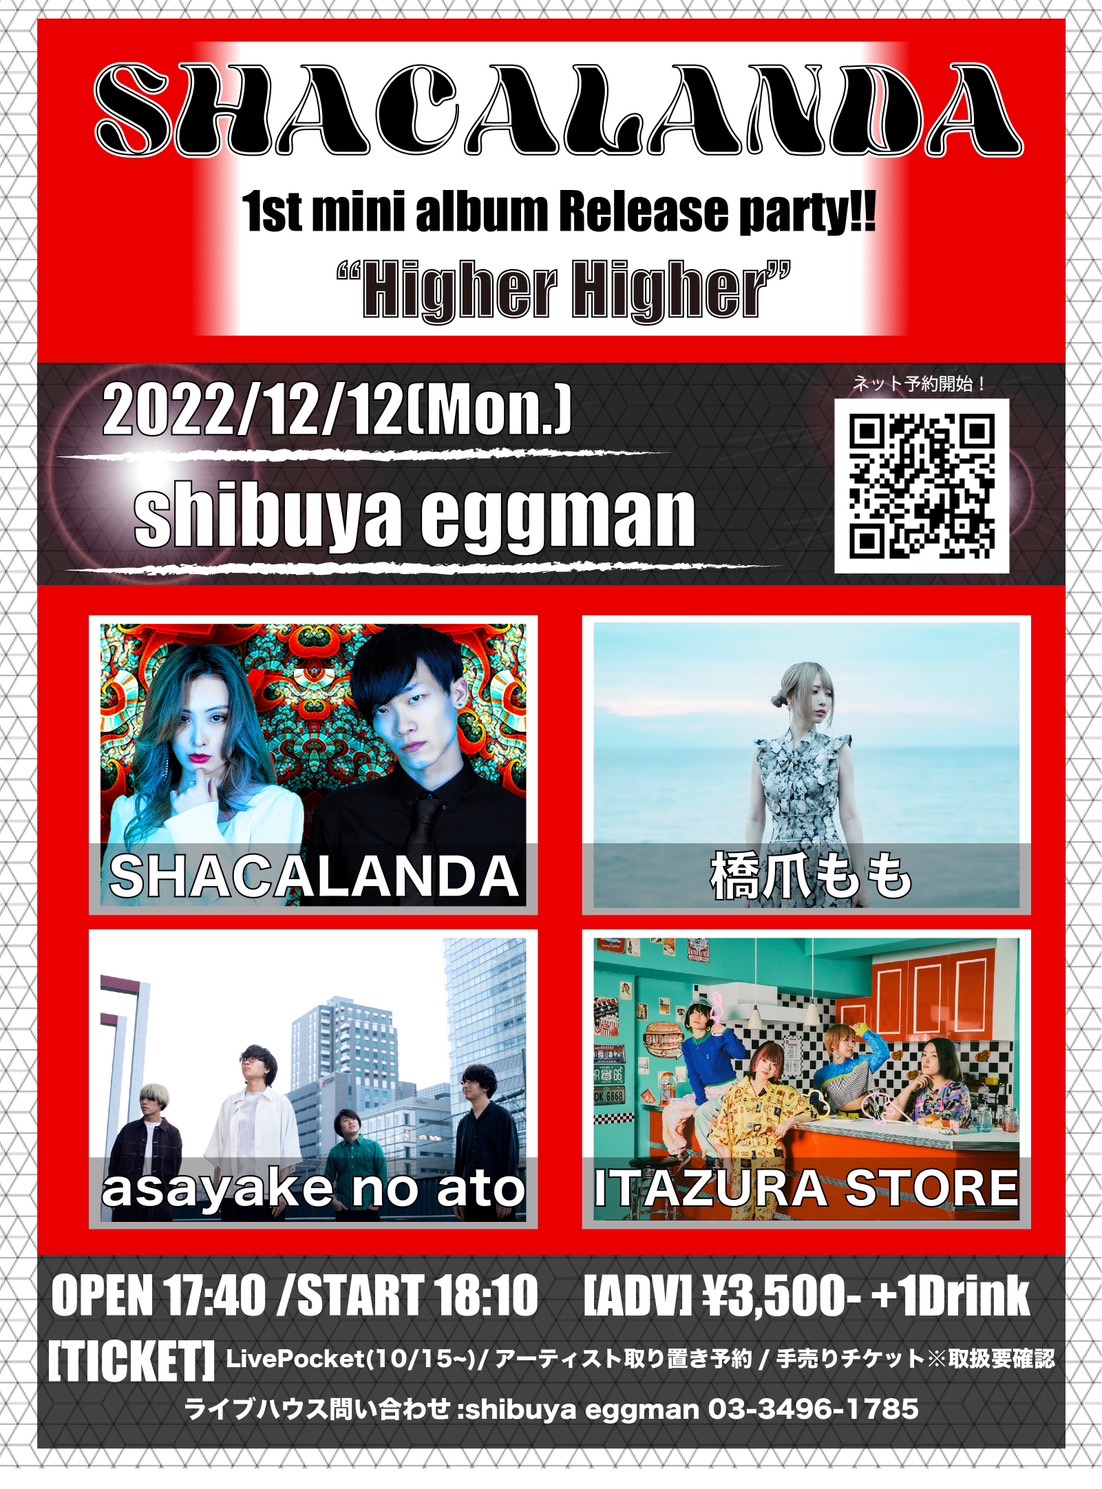 〜SHACALANDA mini Album Release party〜”Higher Higher”